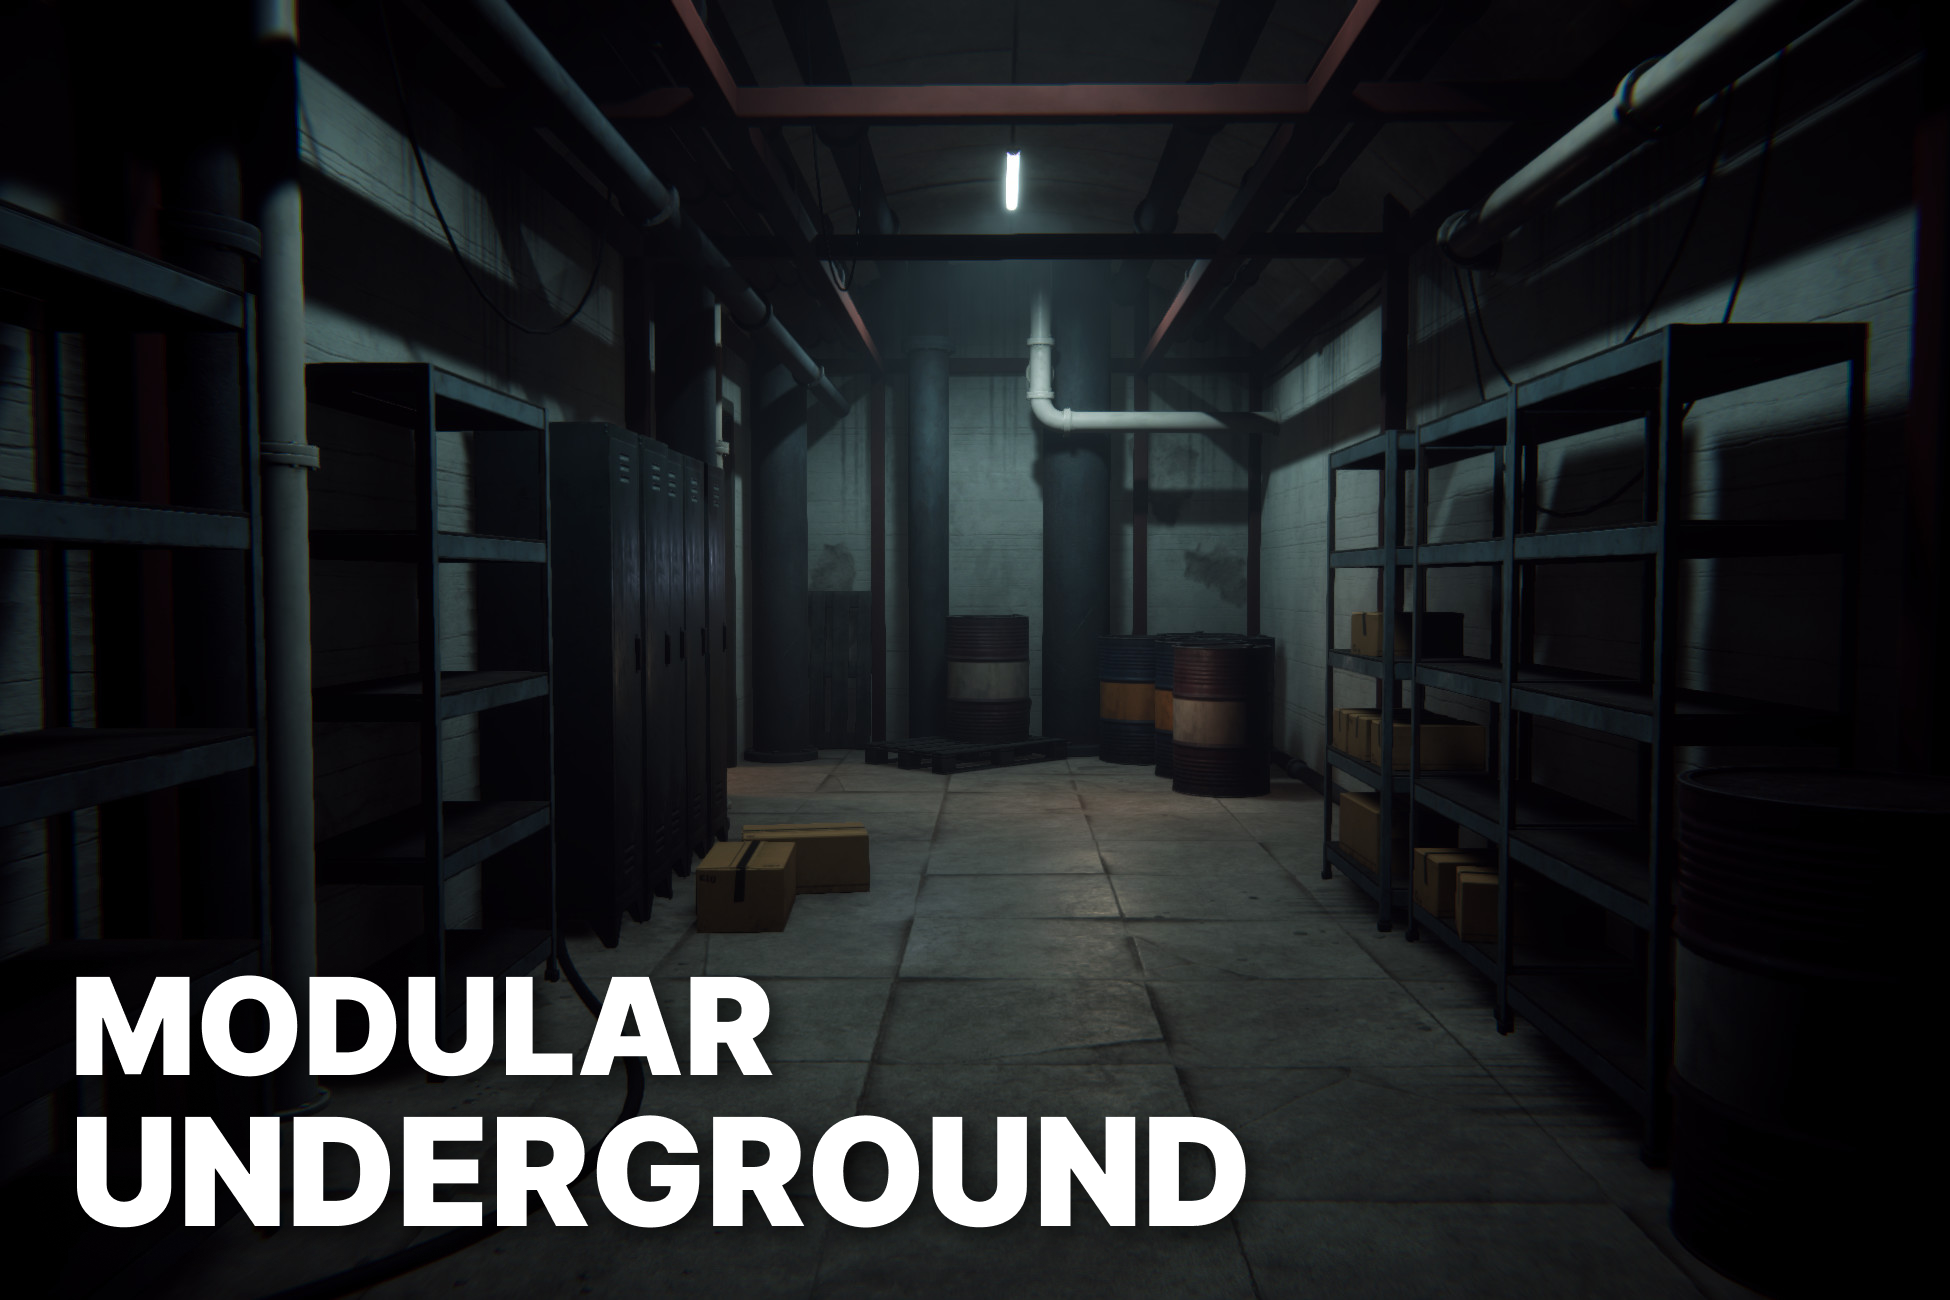 Modular Underground Environment